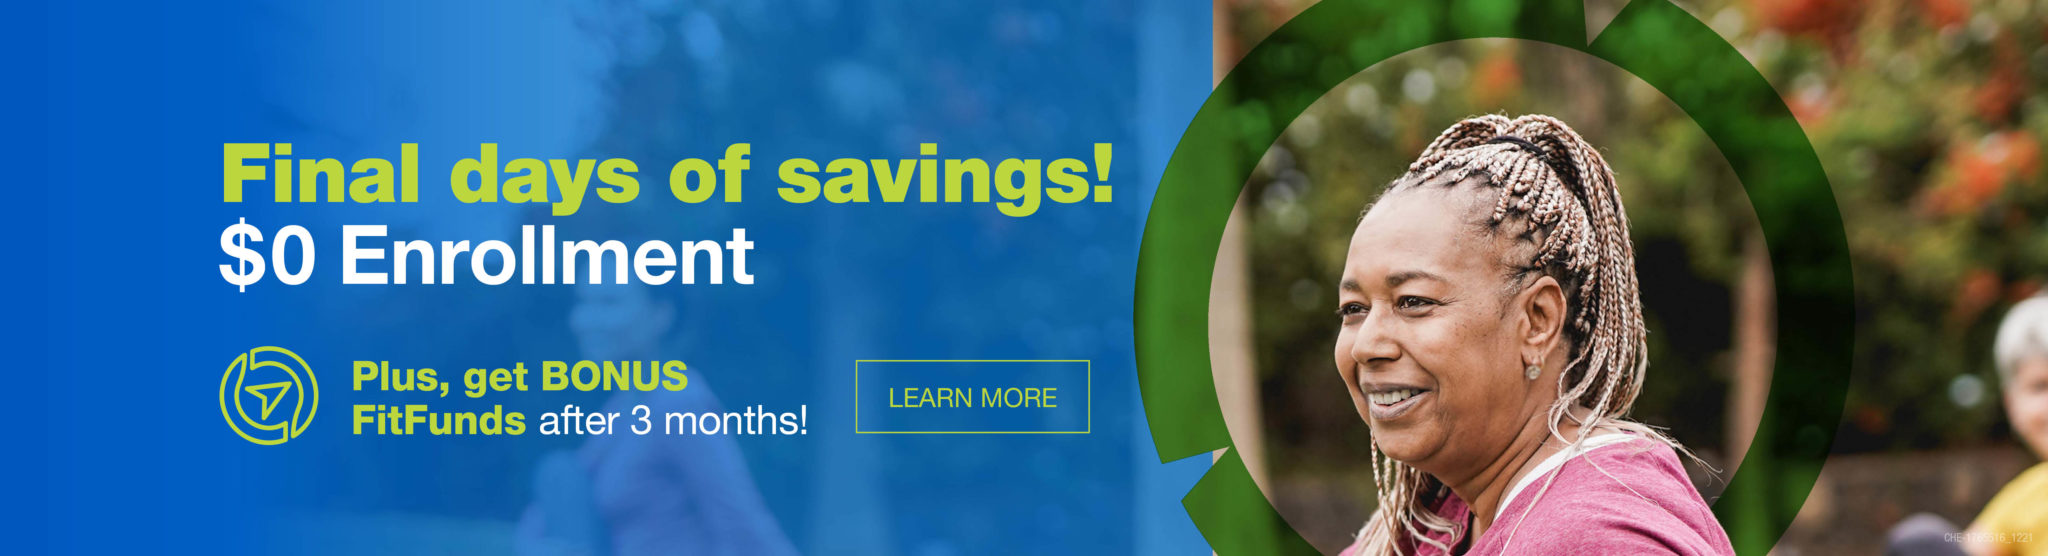 Final days of savings! $0 Enrollment Plus, get BONUS FitFunds after 3 months!